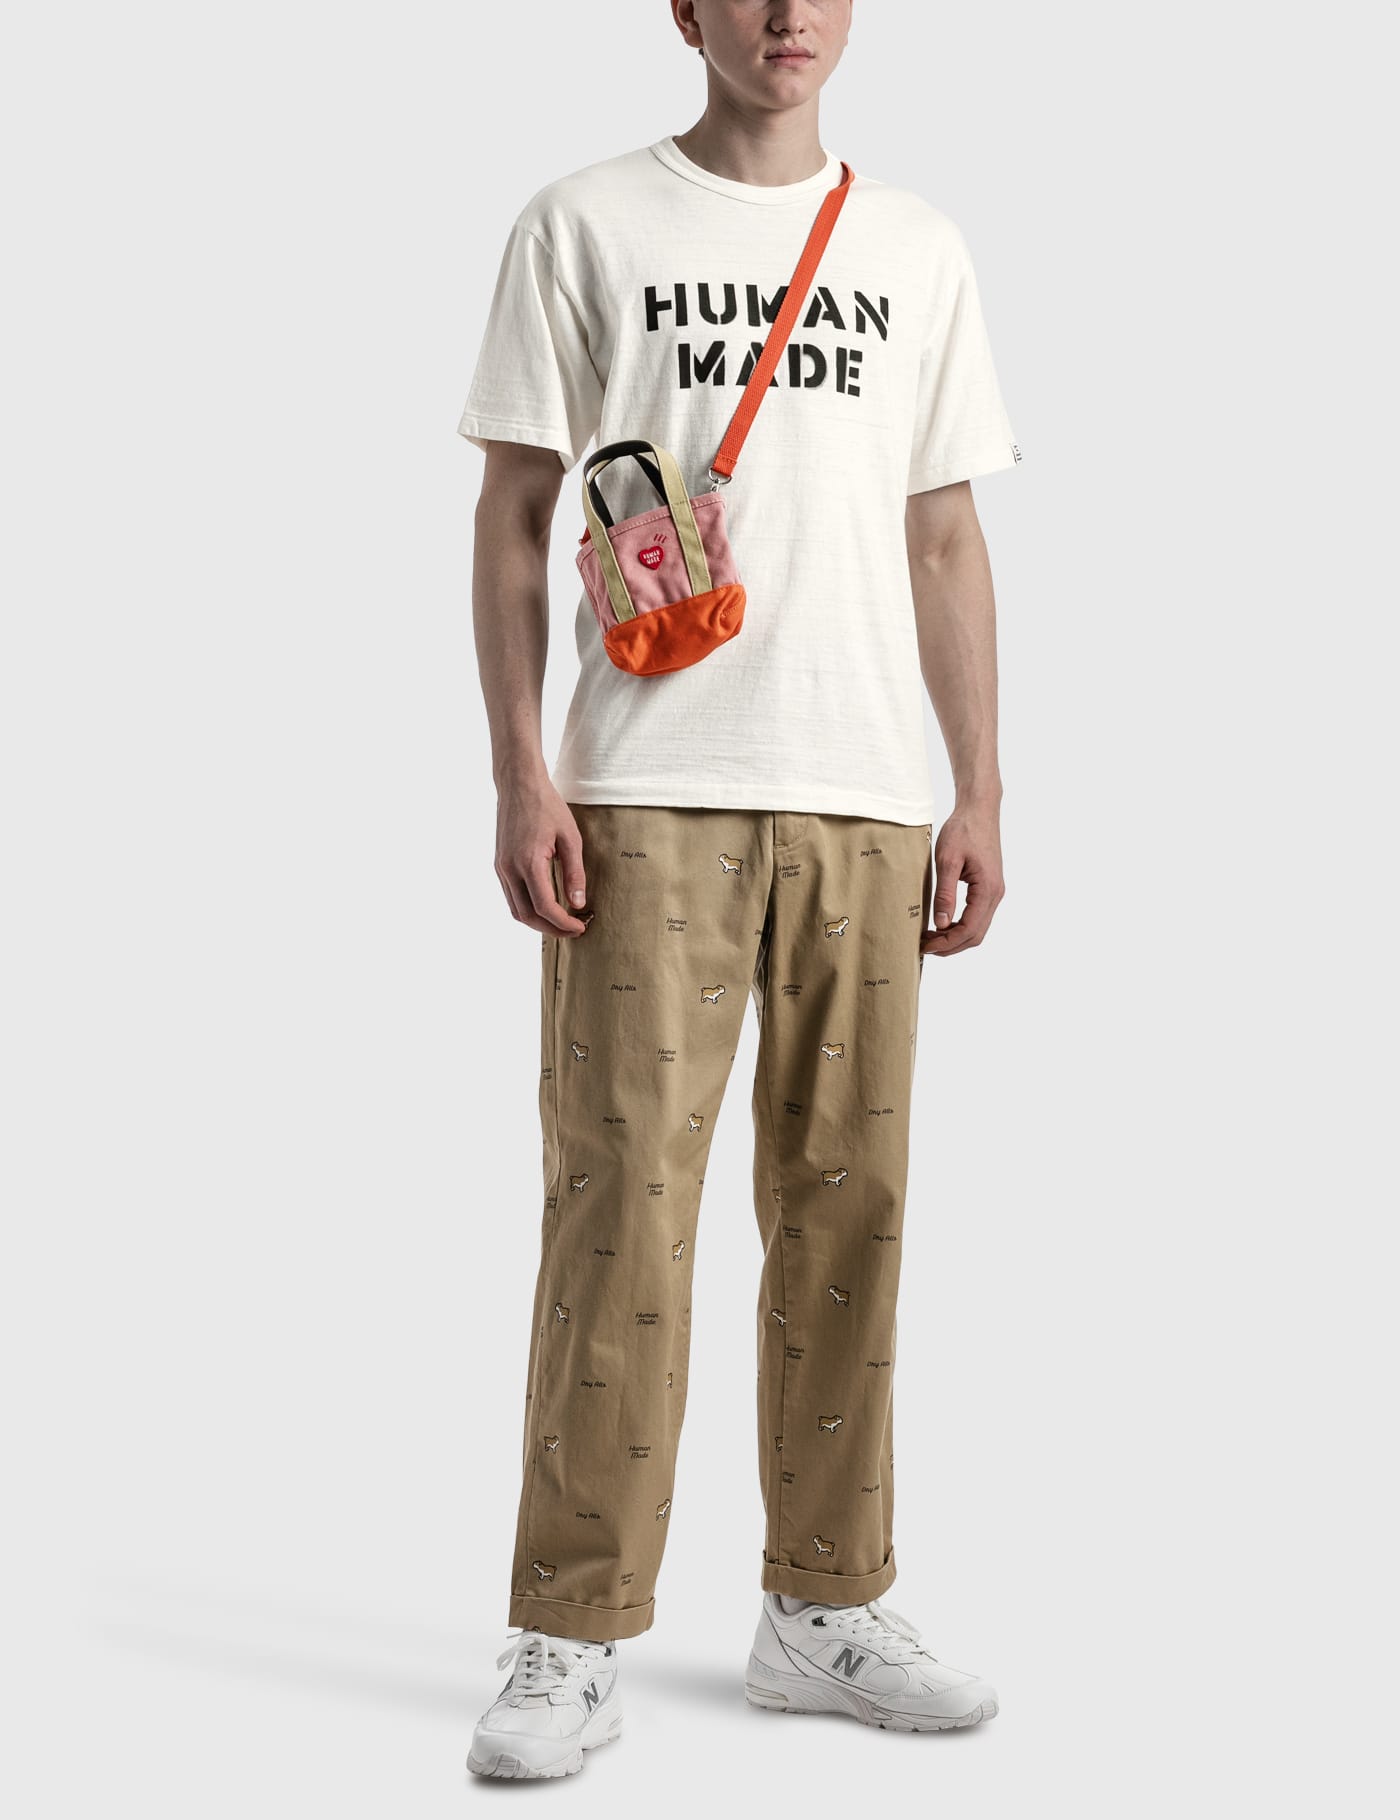 Human Made - Multi-color Mini Shoulder Bag | HBX - Globally 